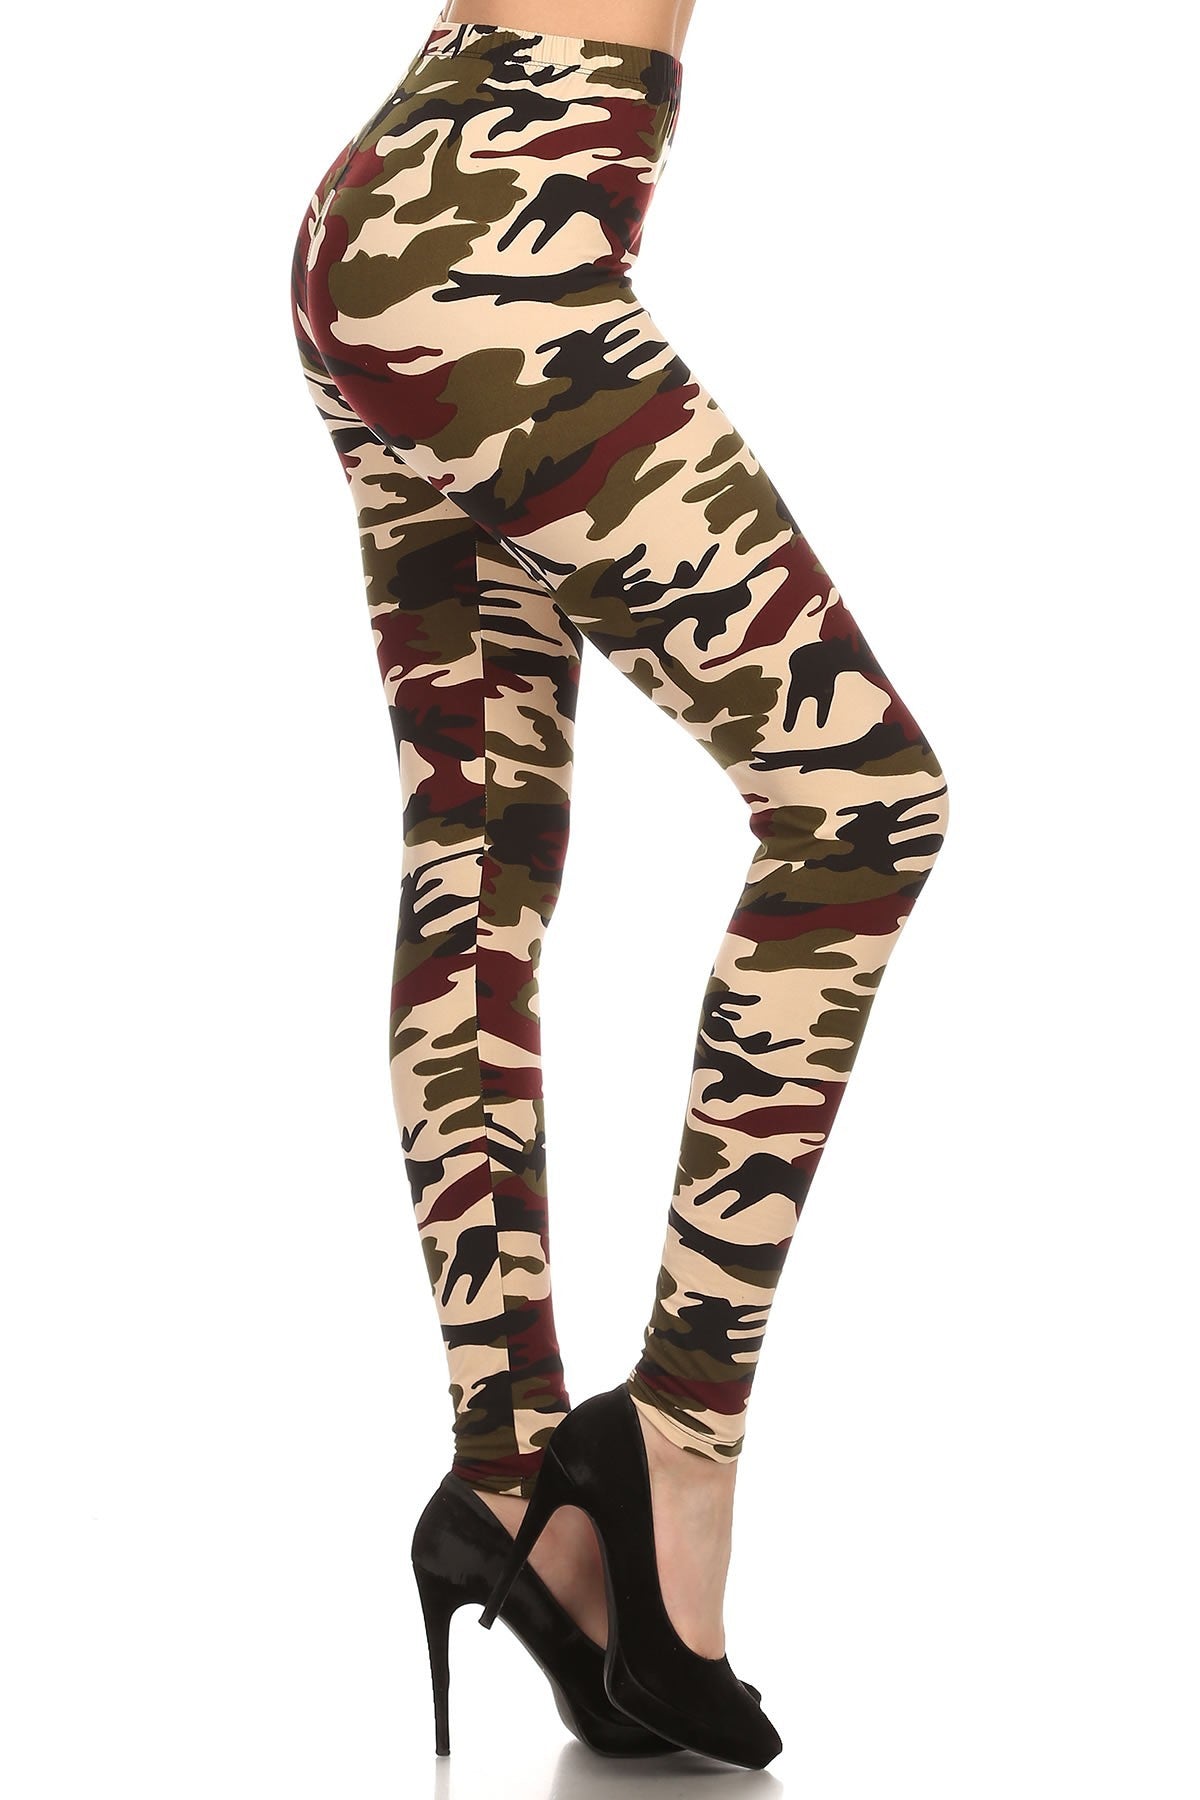 Camo Army Print Pattern Leggings w/ Banded Waist